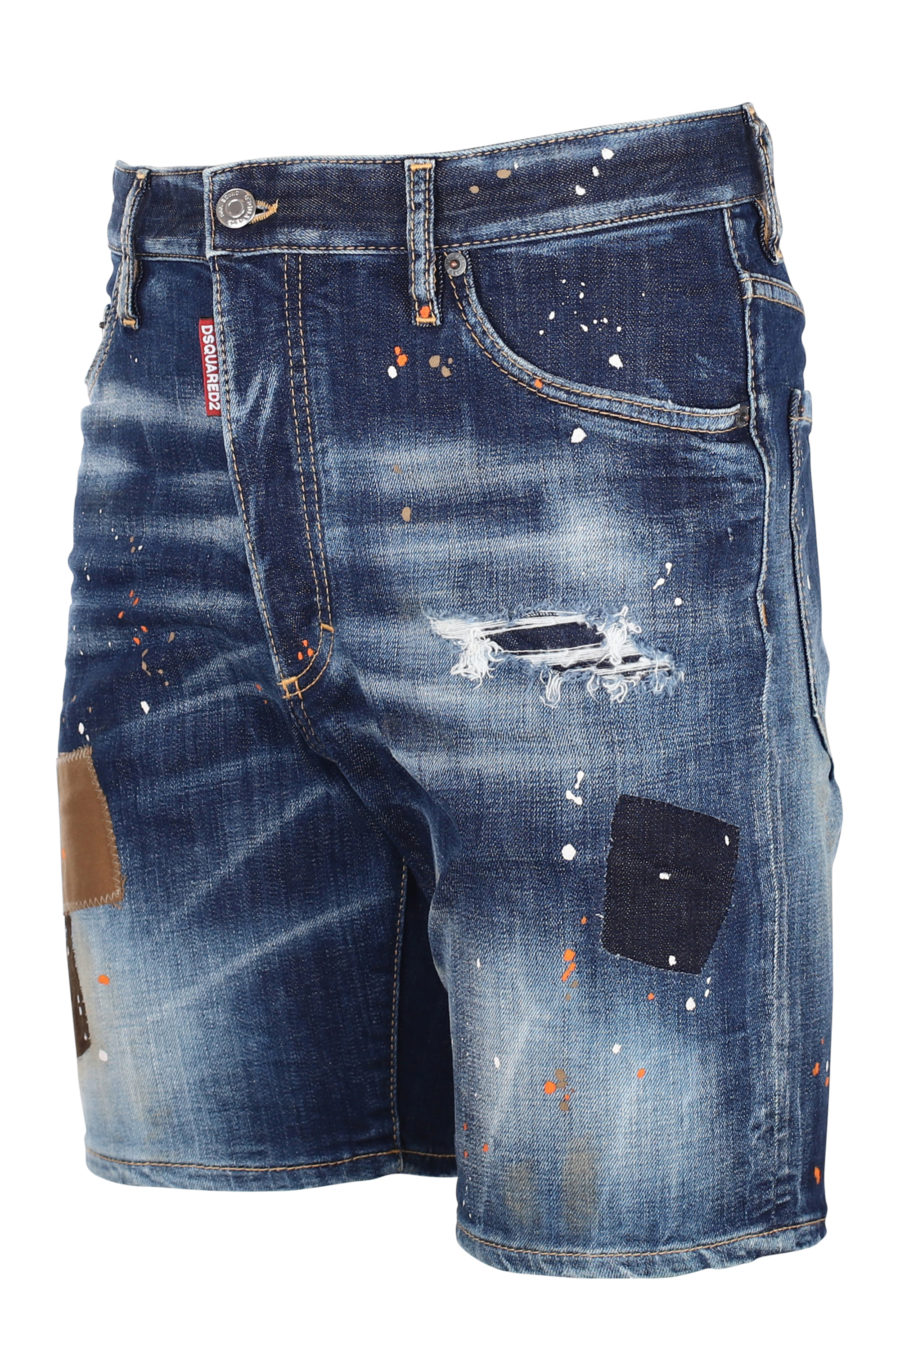 Pantalon corto "patch marine" azul con parches marron - IMG 9801